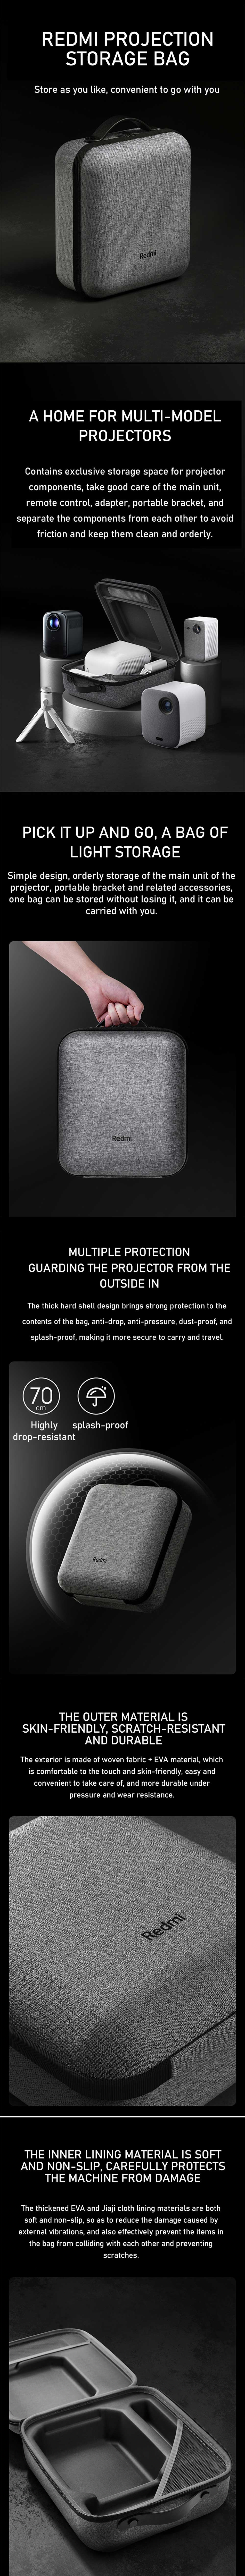 Redmi Portable Projector Storage Bag Drop-proof Anti-pressure Protective Hard Case Compartment Design for Projector